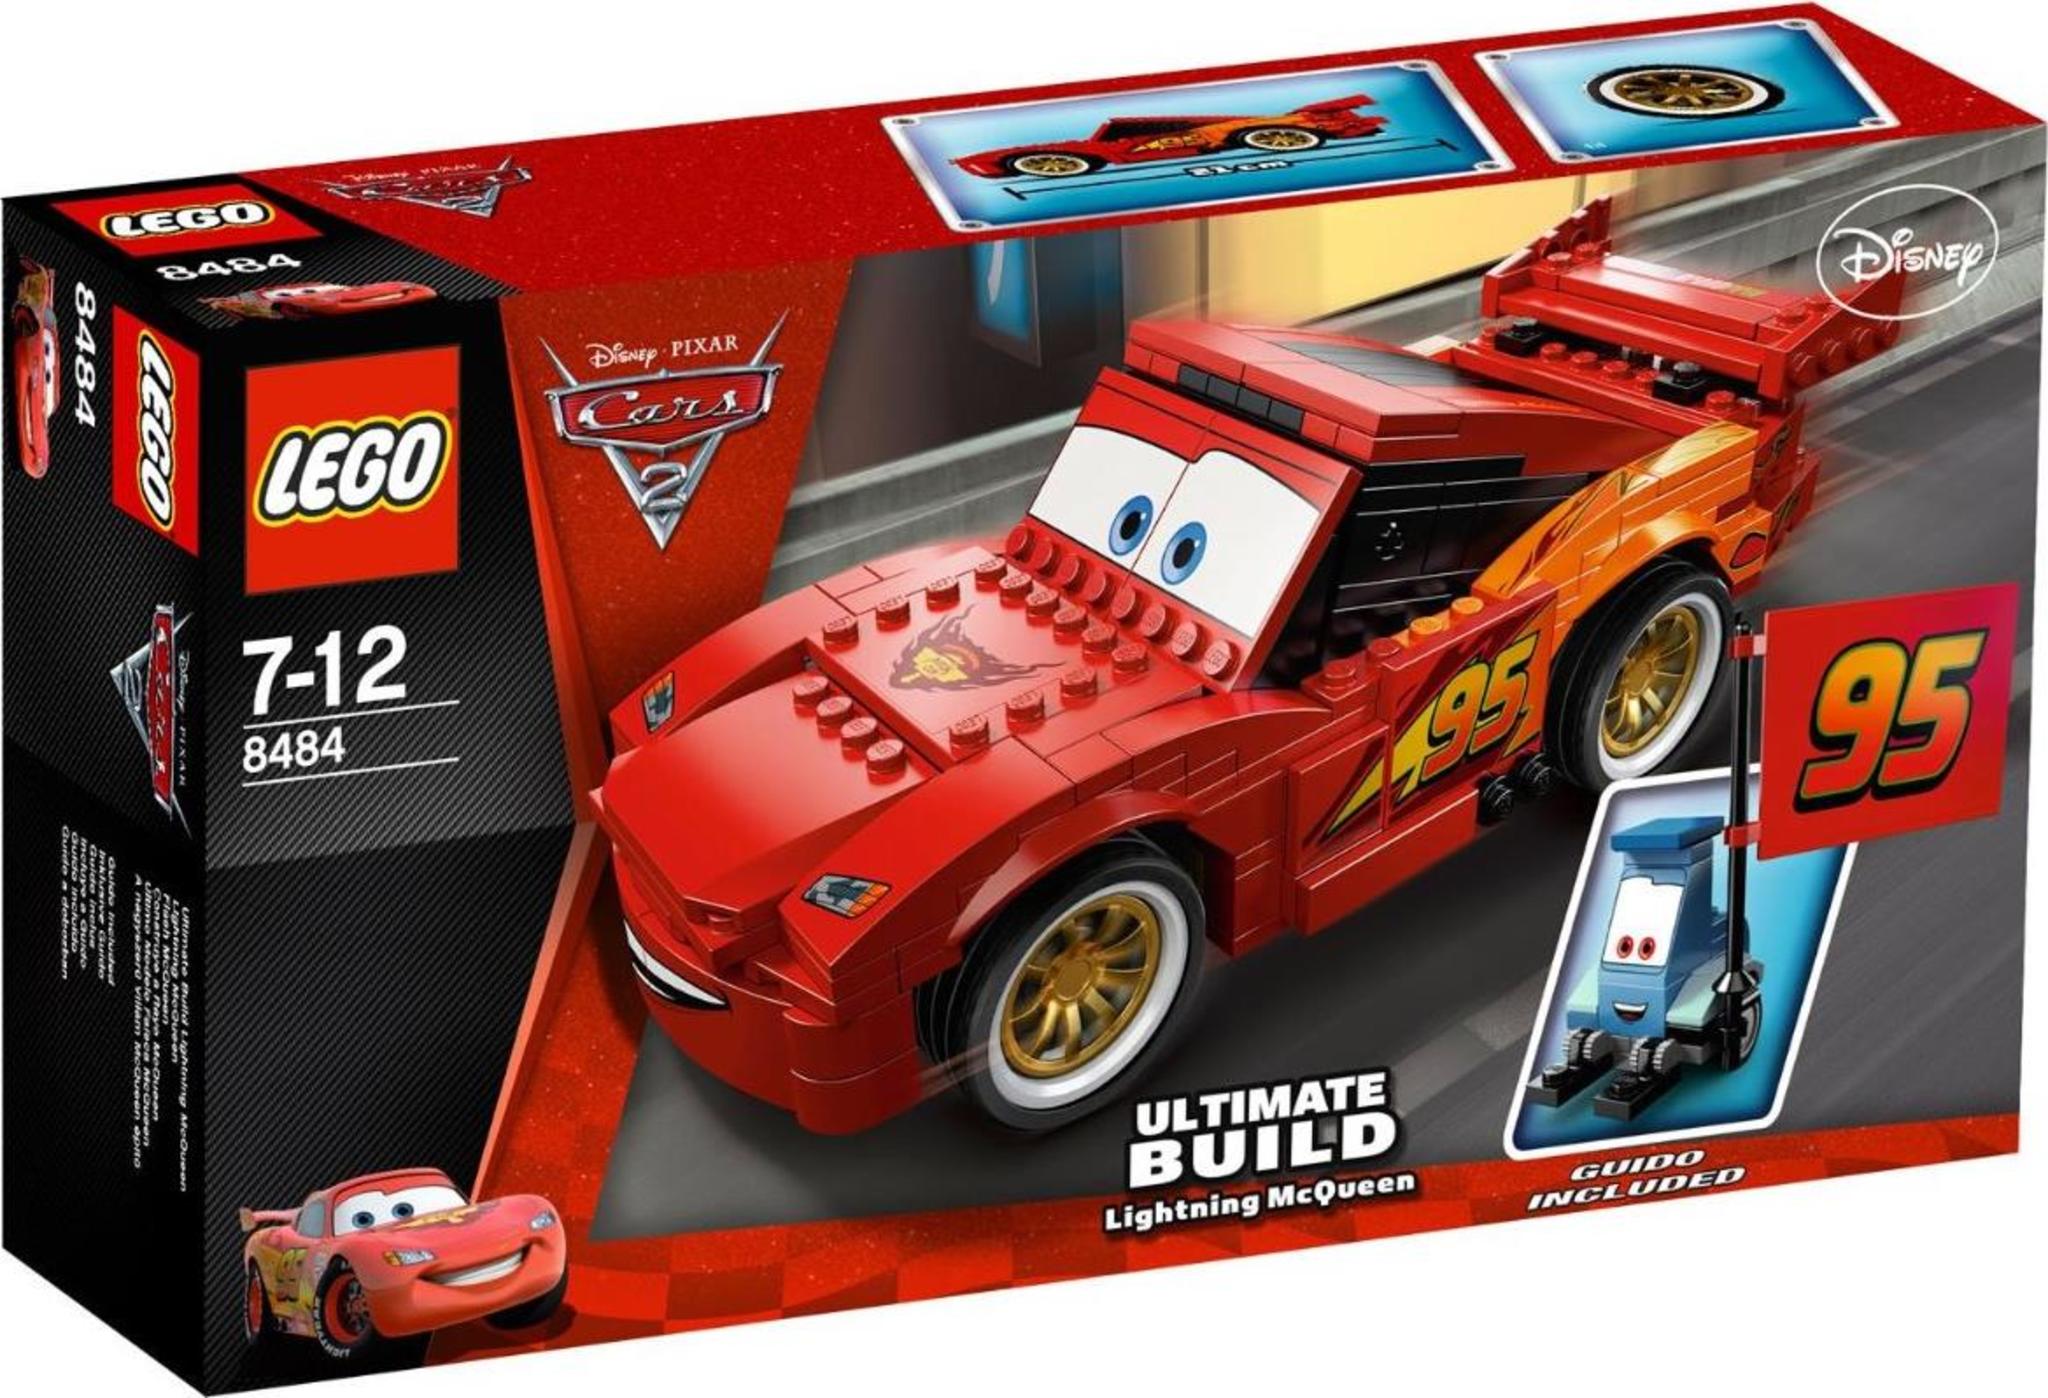 LEGO Cars 8484 - Ultimate Build Lightning McQueen | Mattonito